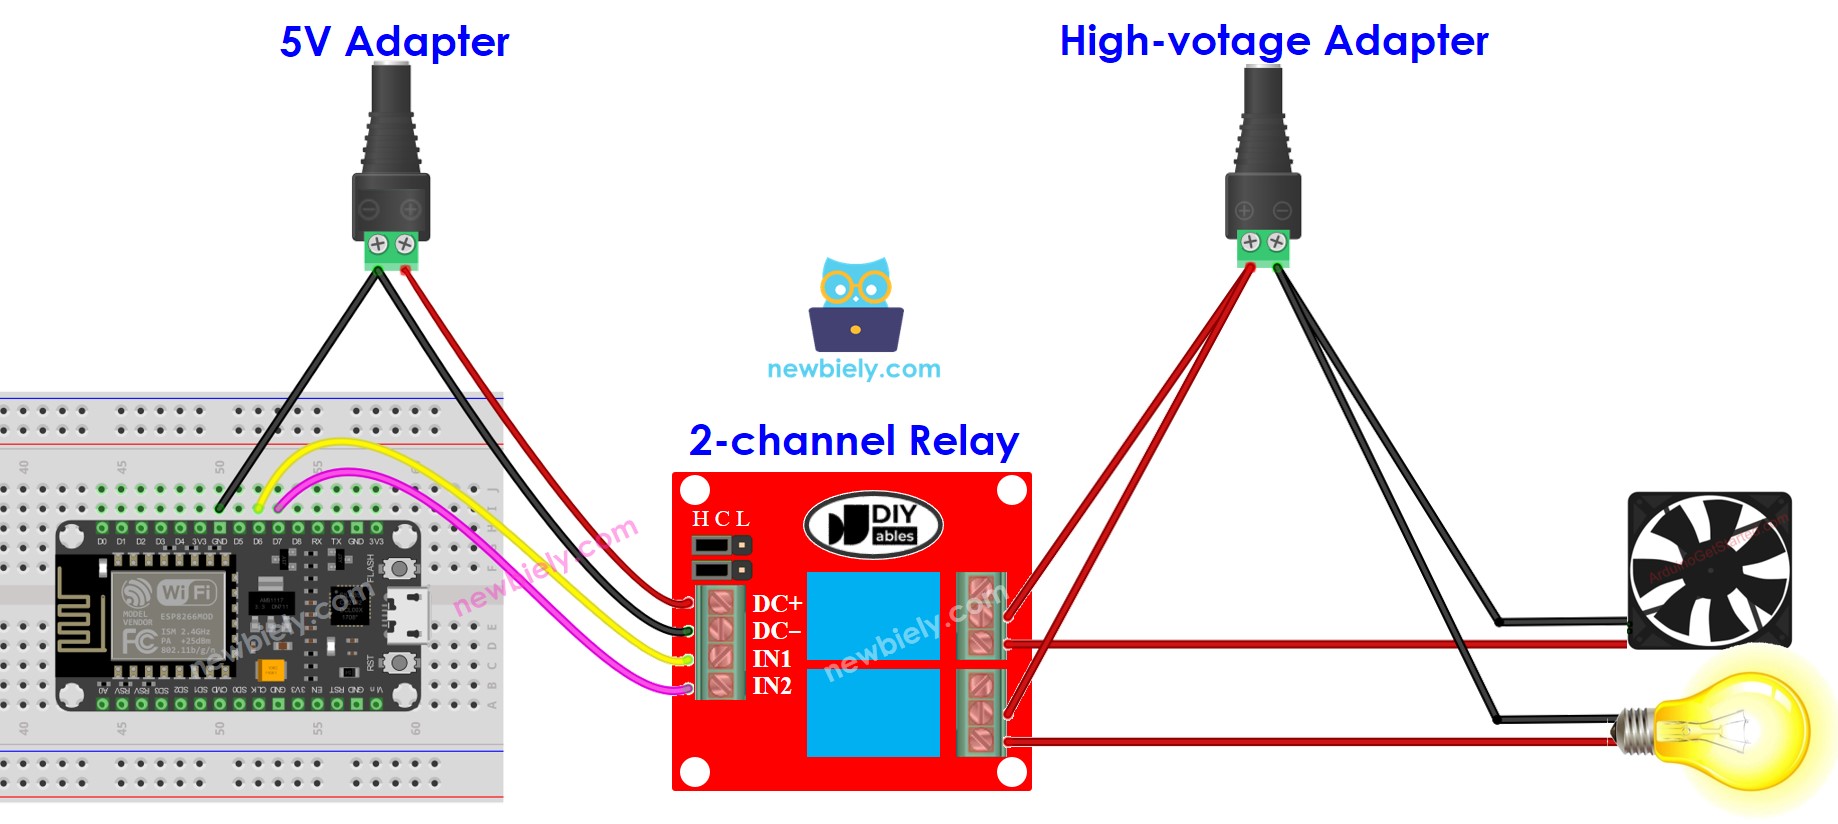 The wiring diagram between ESP8266 NodeMCU and 2-channel relay module external power source